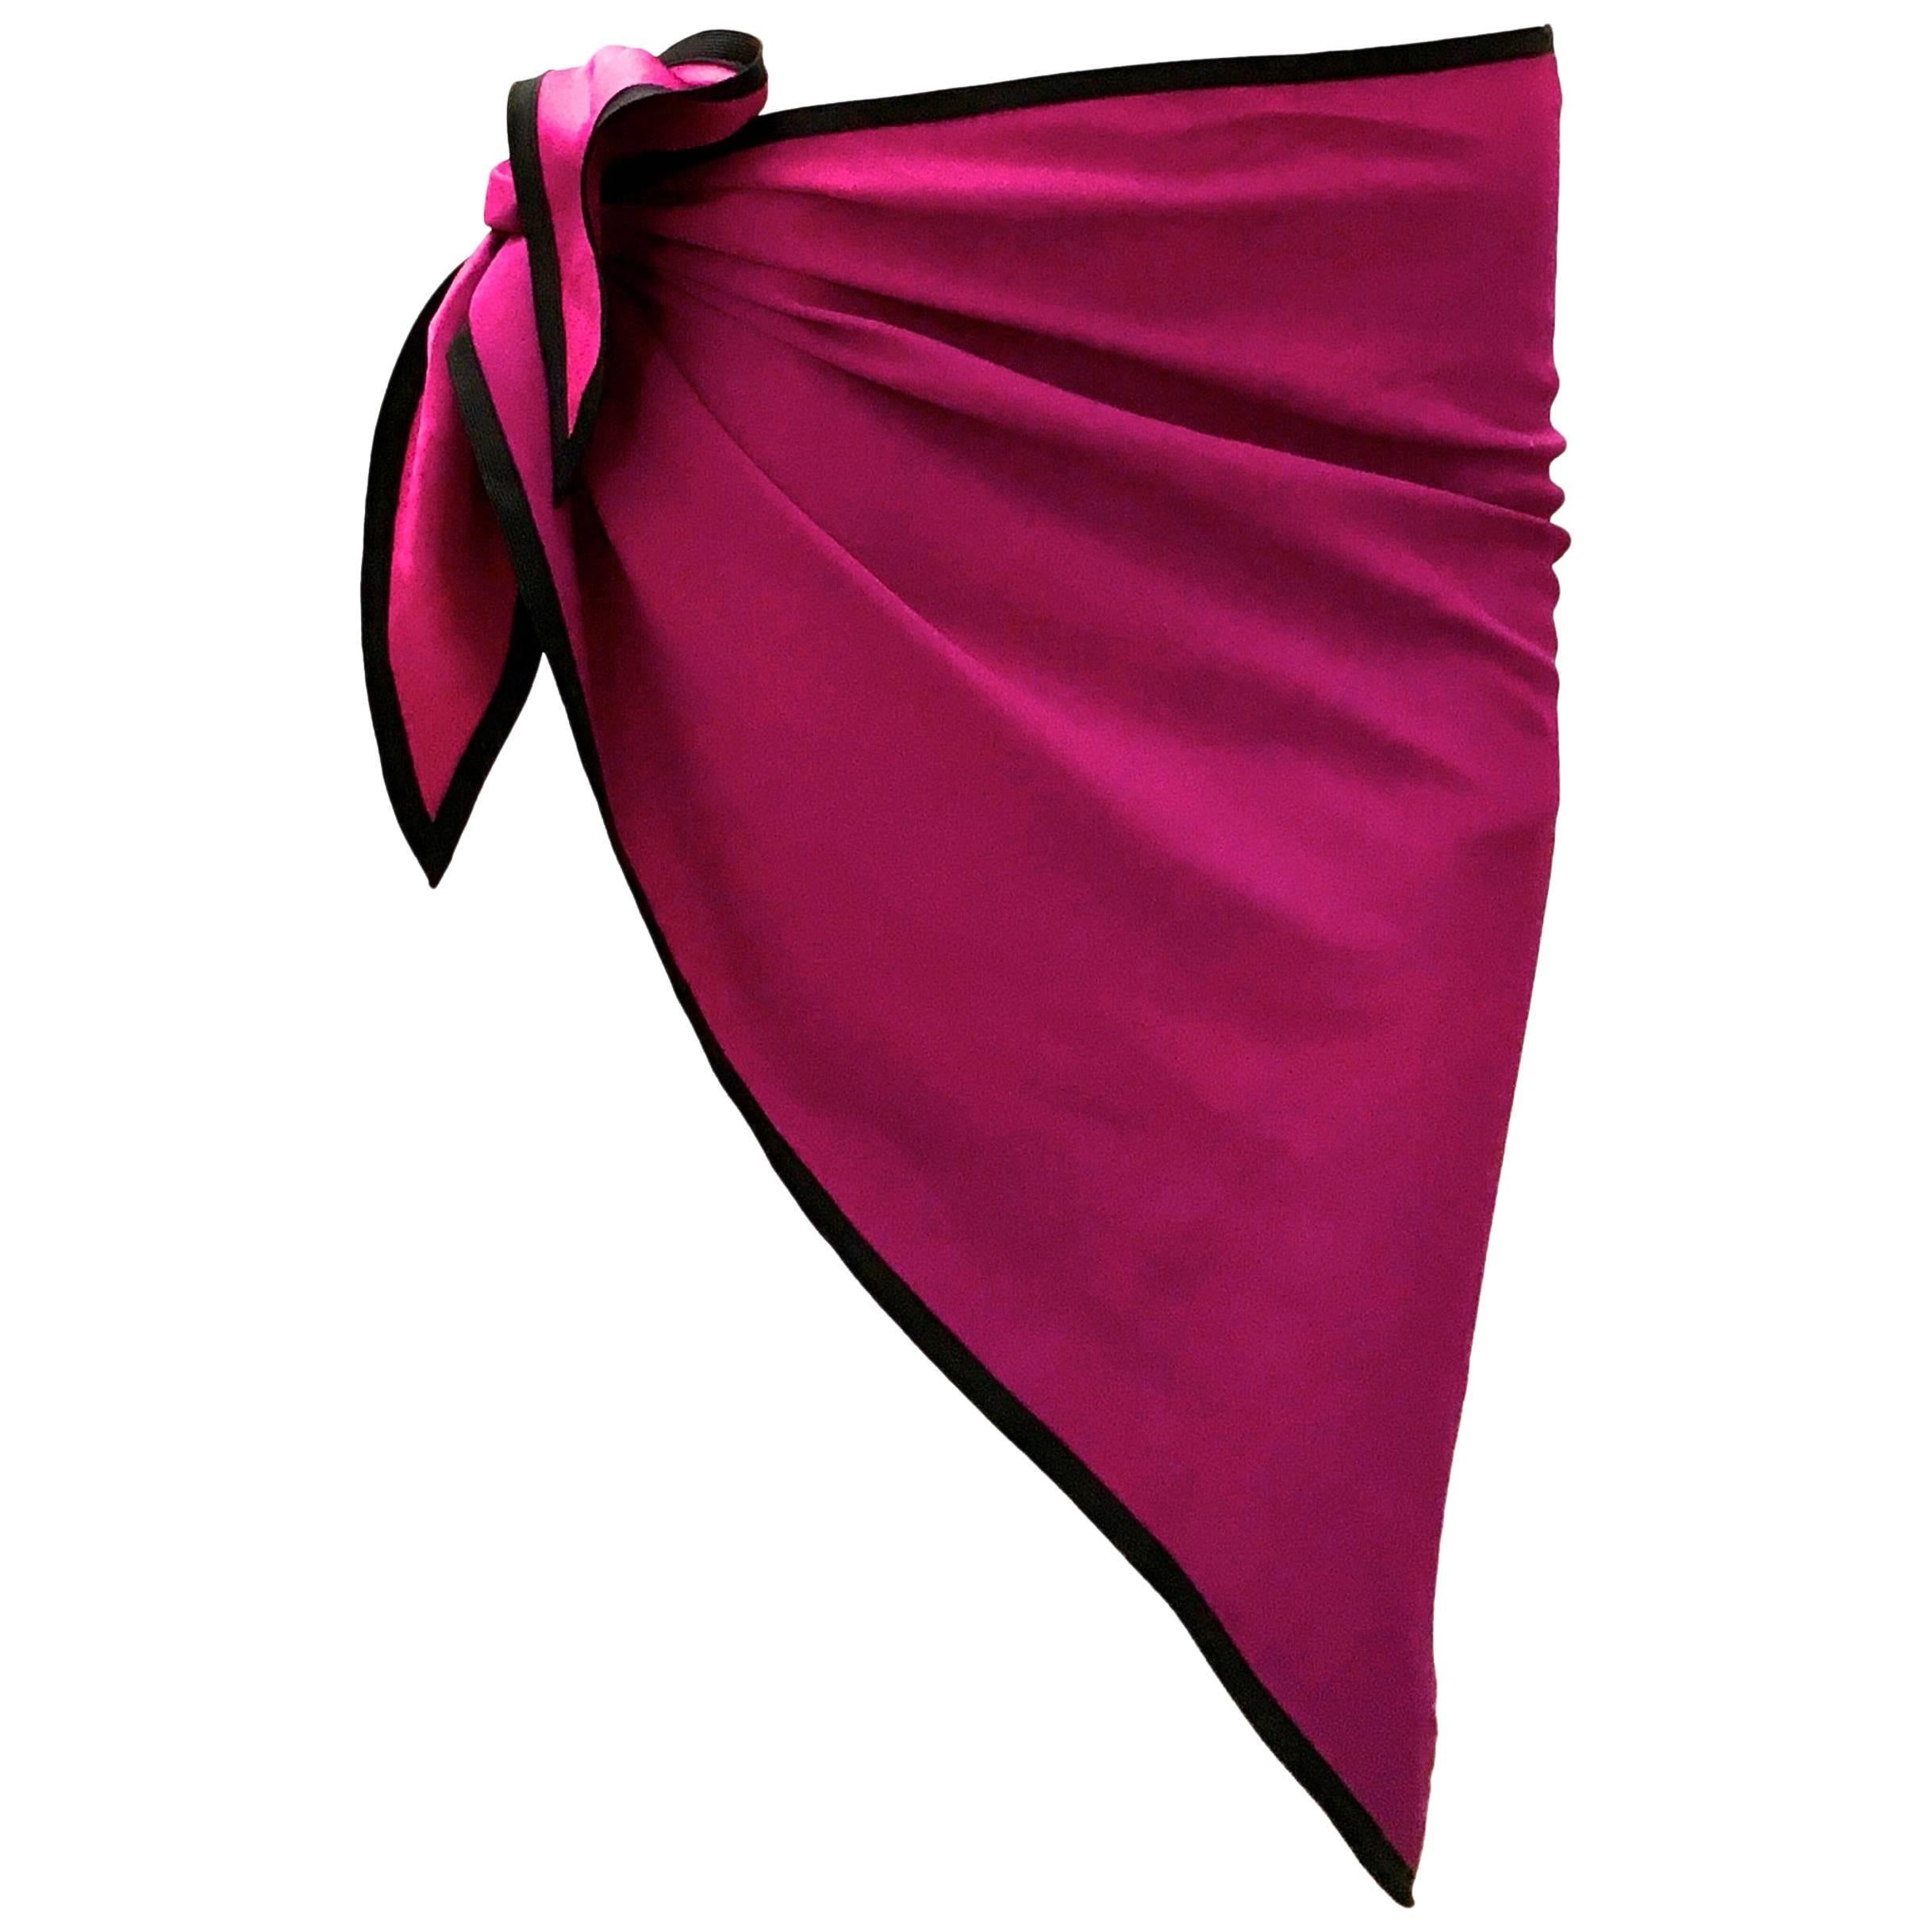 Yves Saint Laurent / YSL silk scarf / shawl vintage For Sale